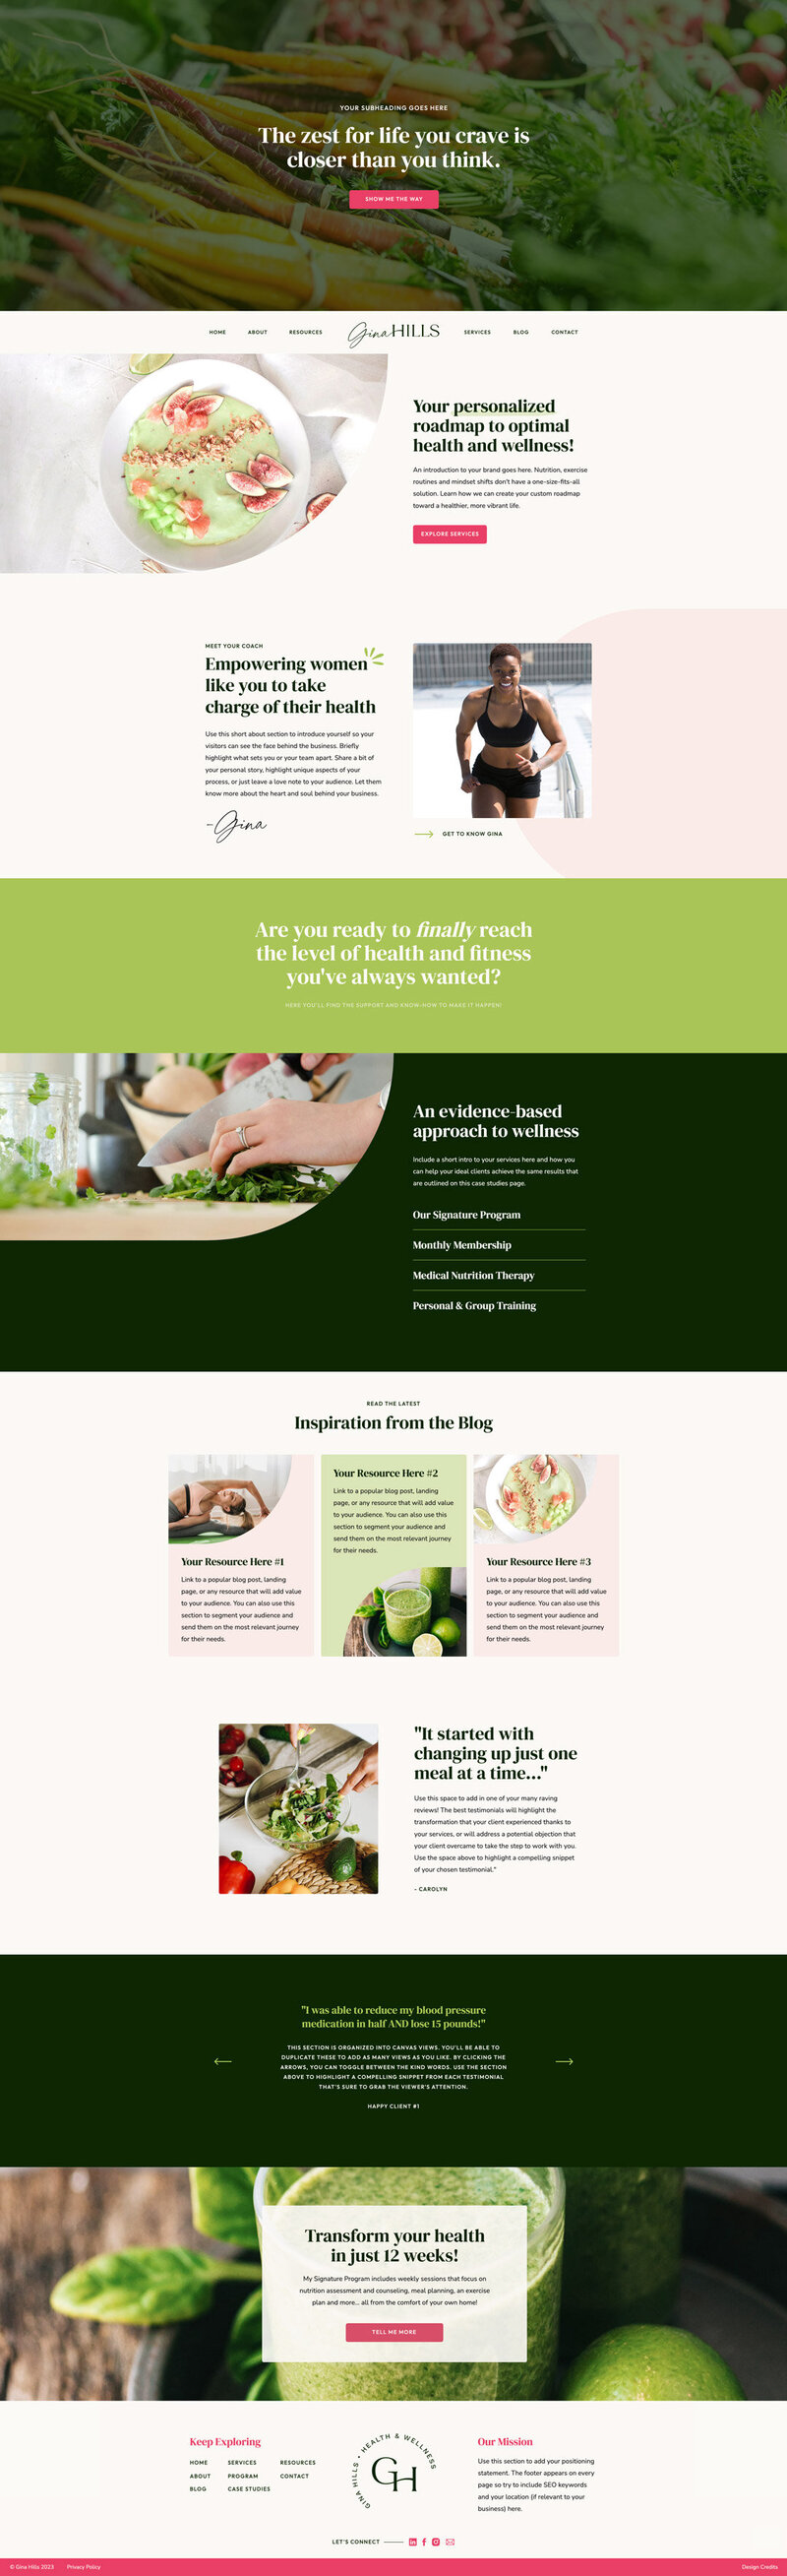 website template for wellness brand